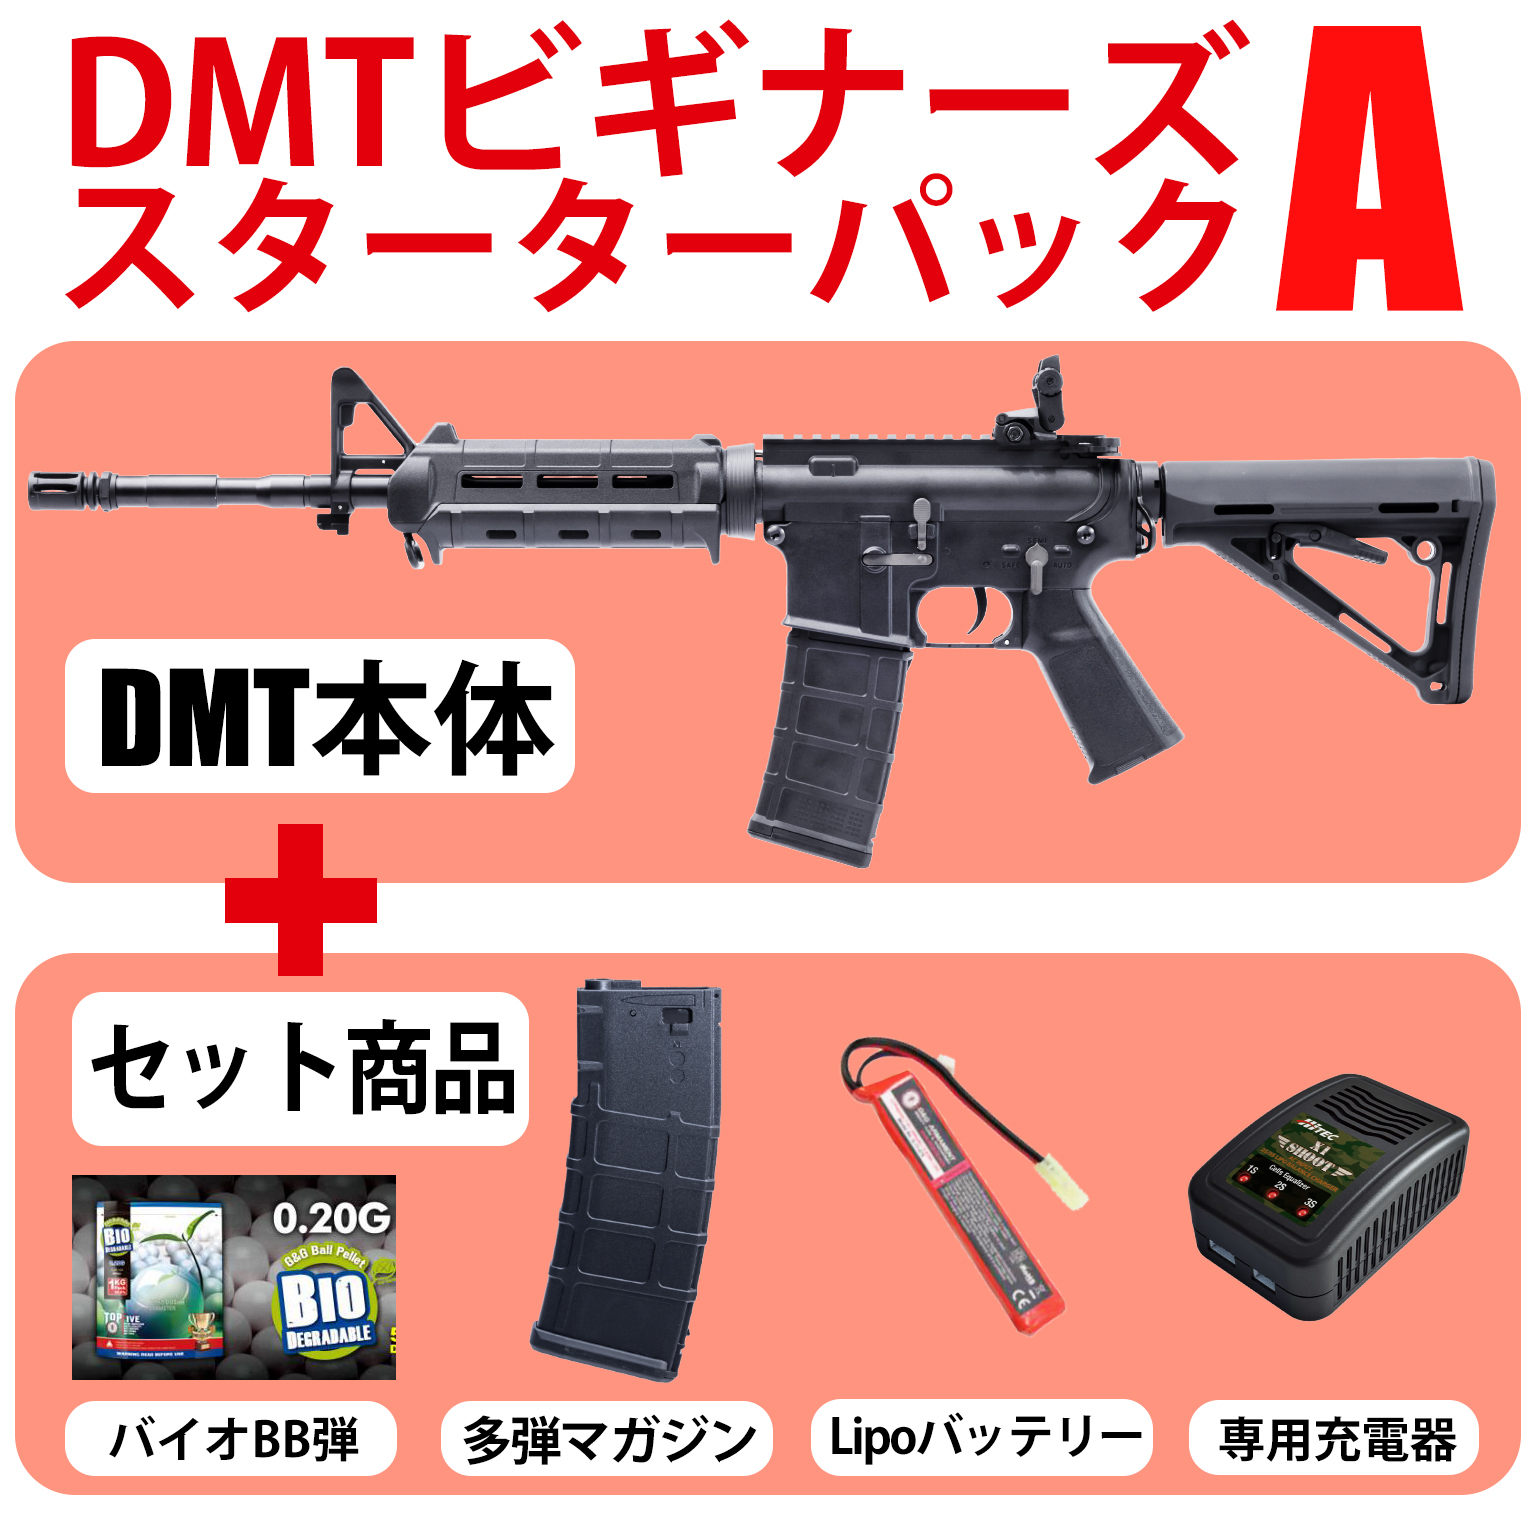 AIRSOFT97 沖縄本店 通販部 / DMT AR15 Custom 9